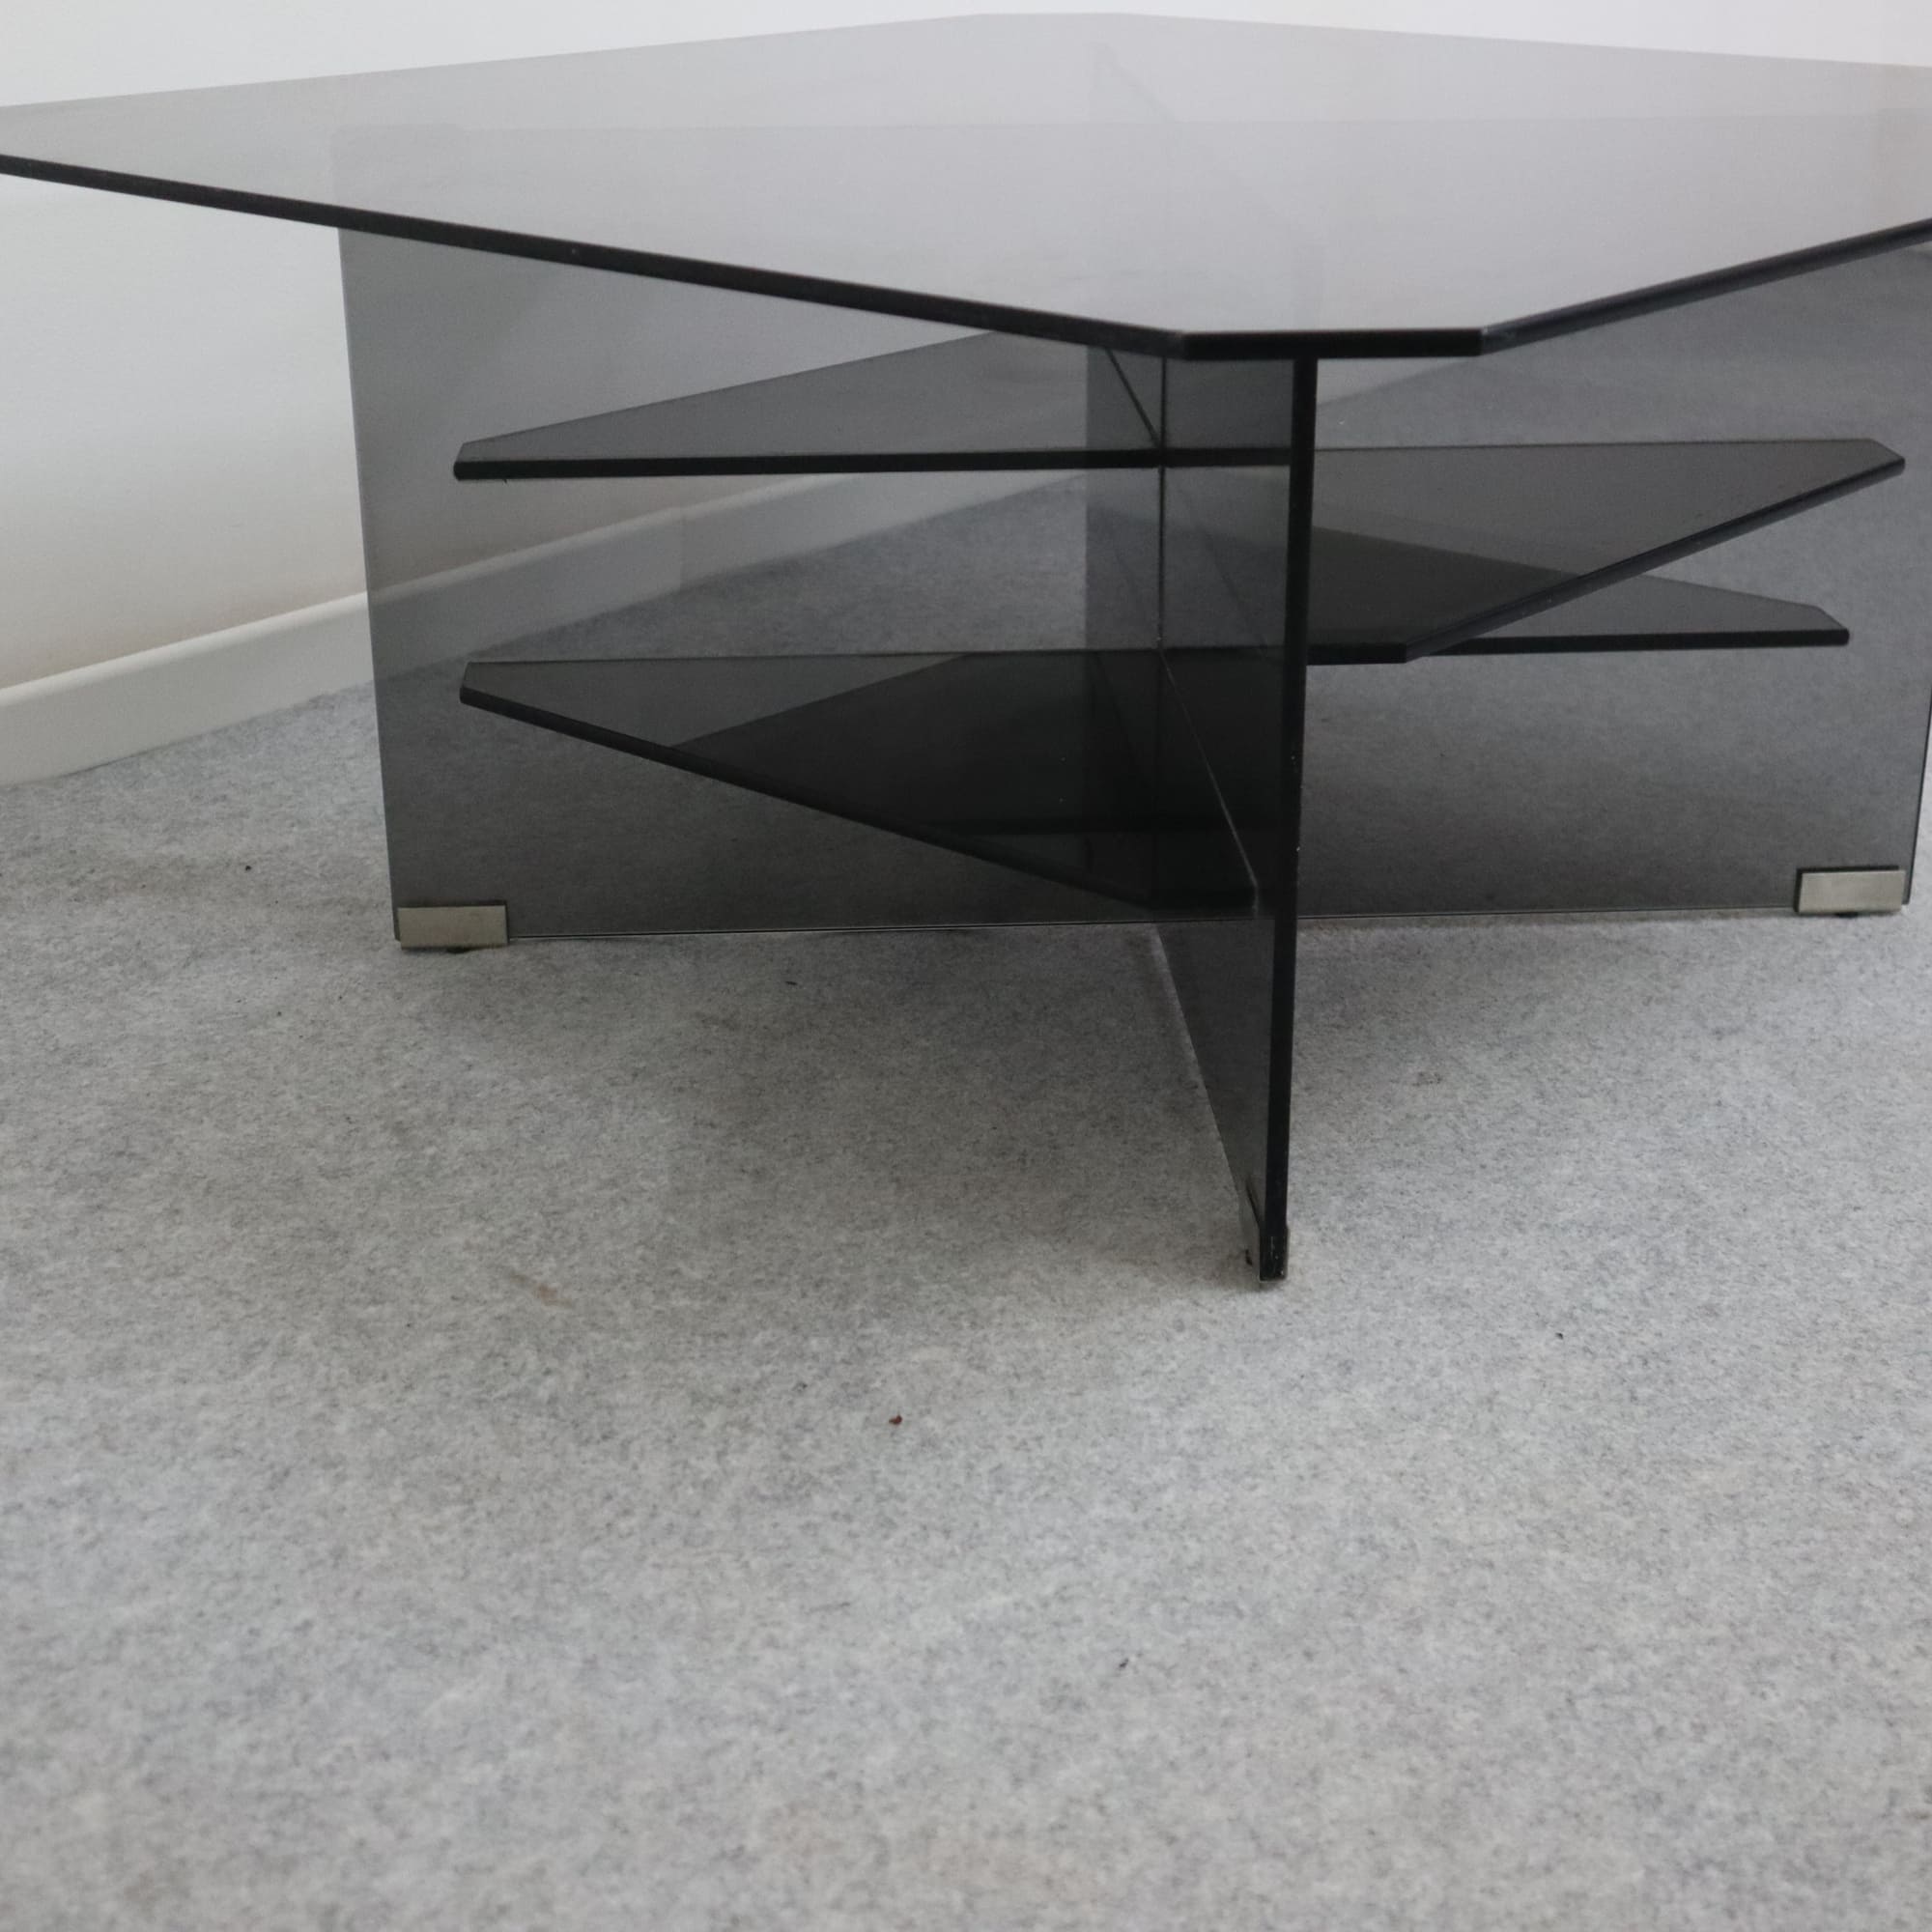 visionidepoca-visioni-depoca-smoked-glass-coffee table-70s-gallotti-radice-furniture-design-vintage-made-italy-4